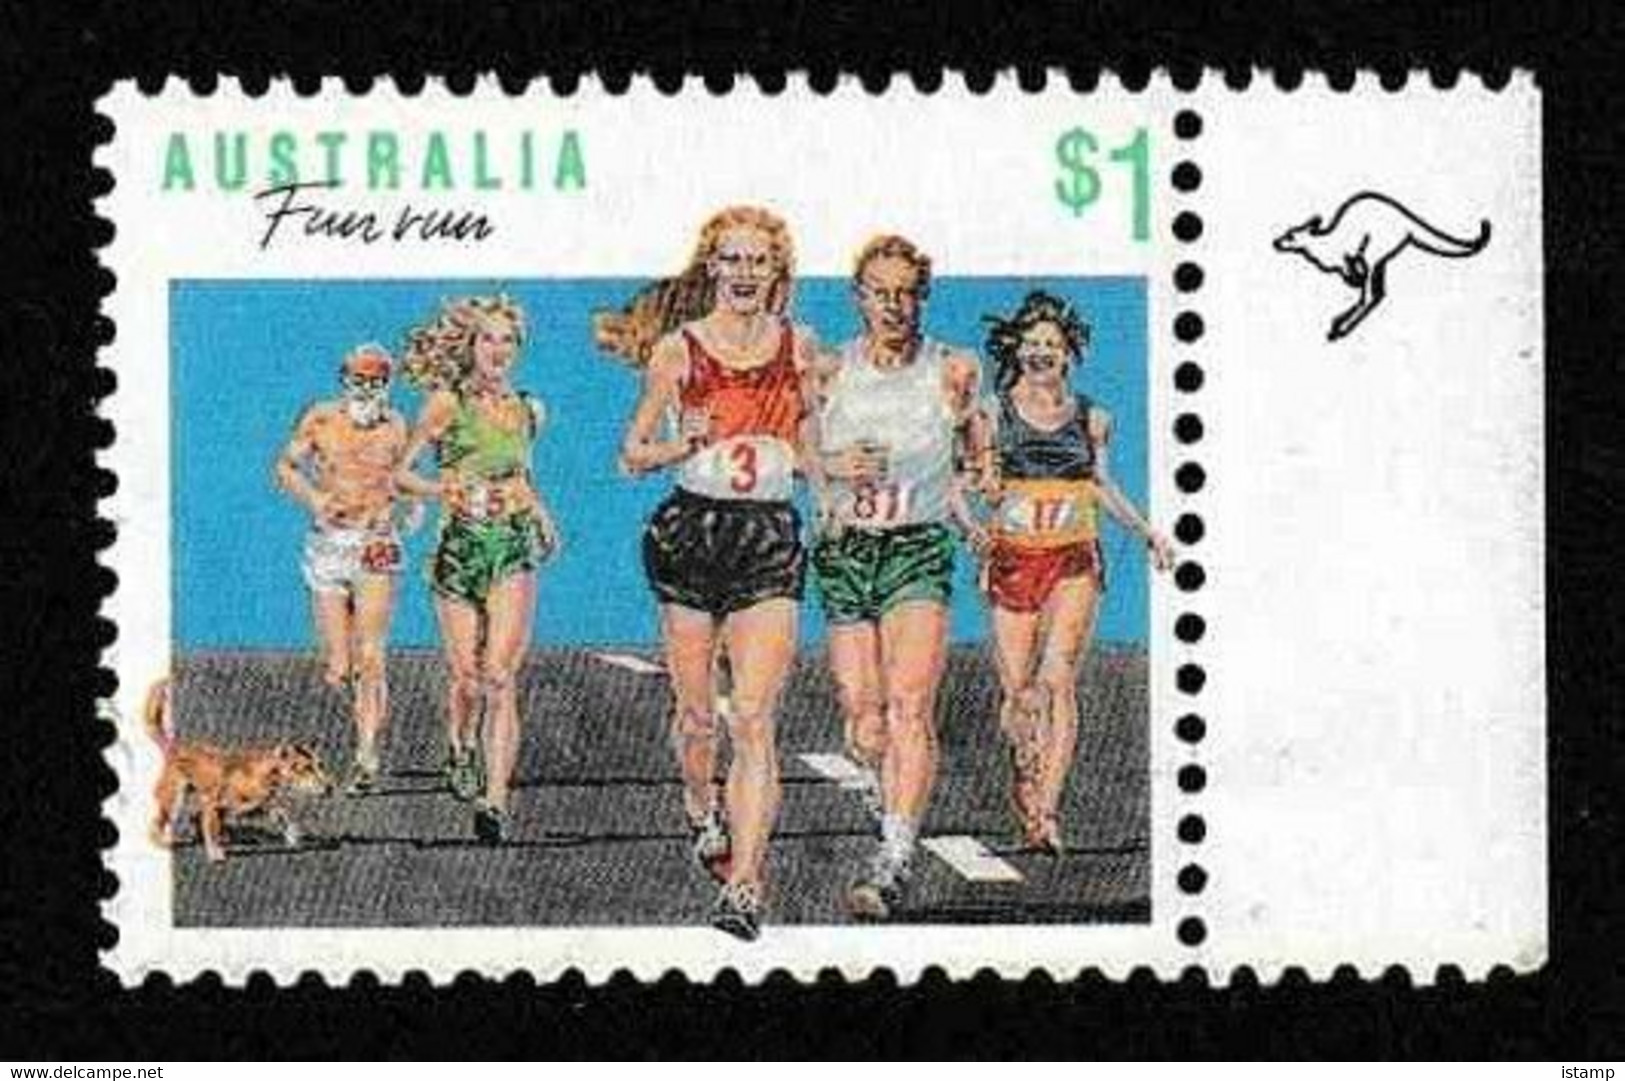 ⭕1990 - Australia SPORTS Series FUN RUNS (5th Reprint - Kangaroo) - $1 Stamp MNH⭕ - Proeven & Herdruk